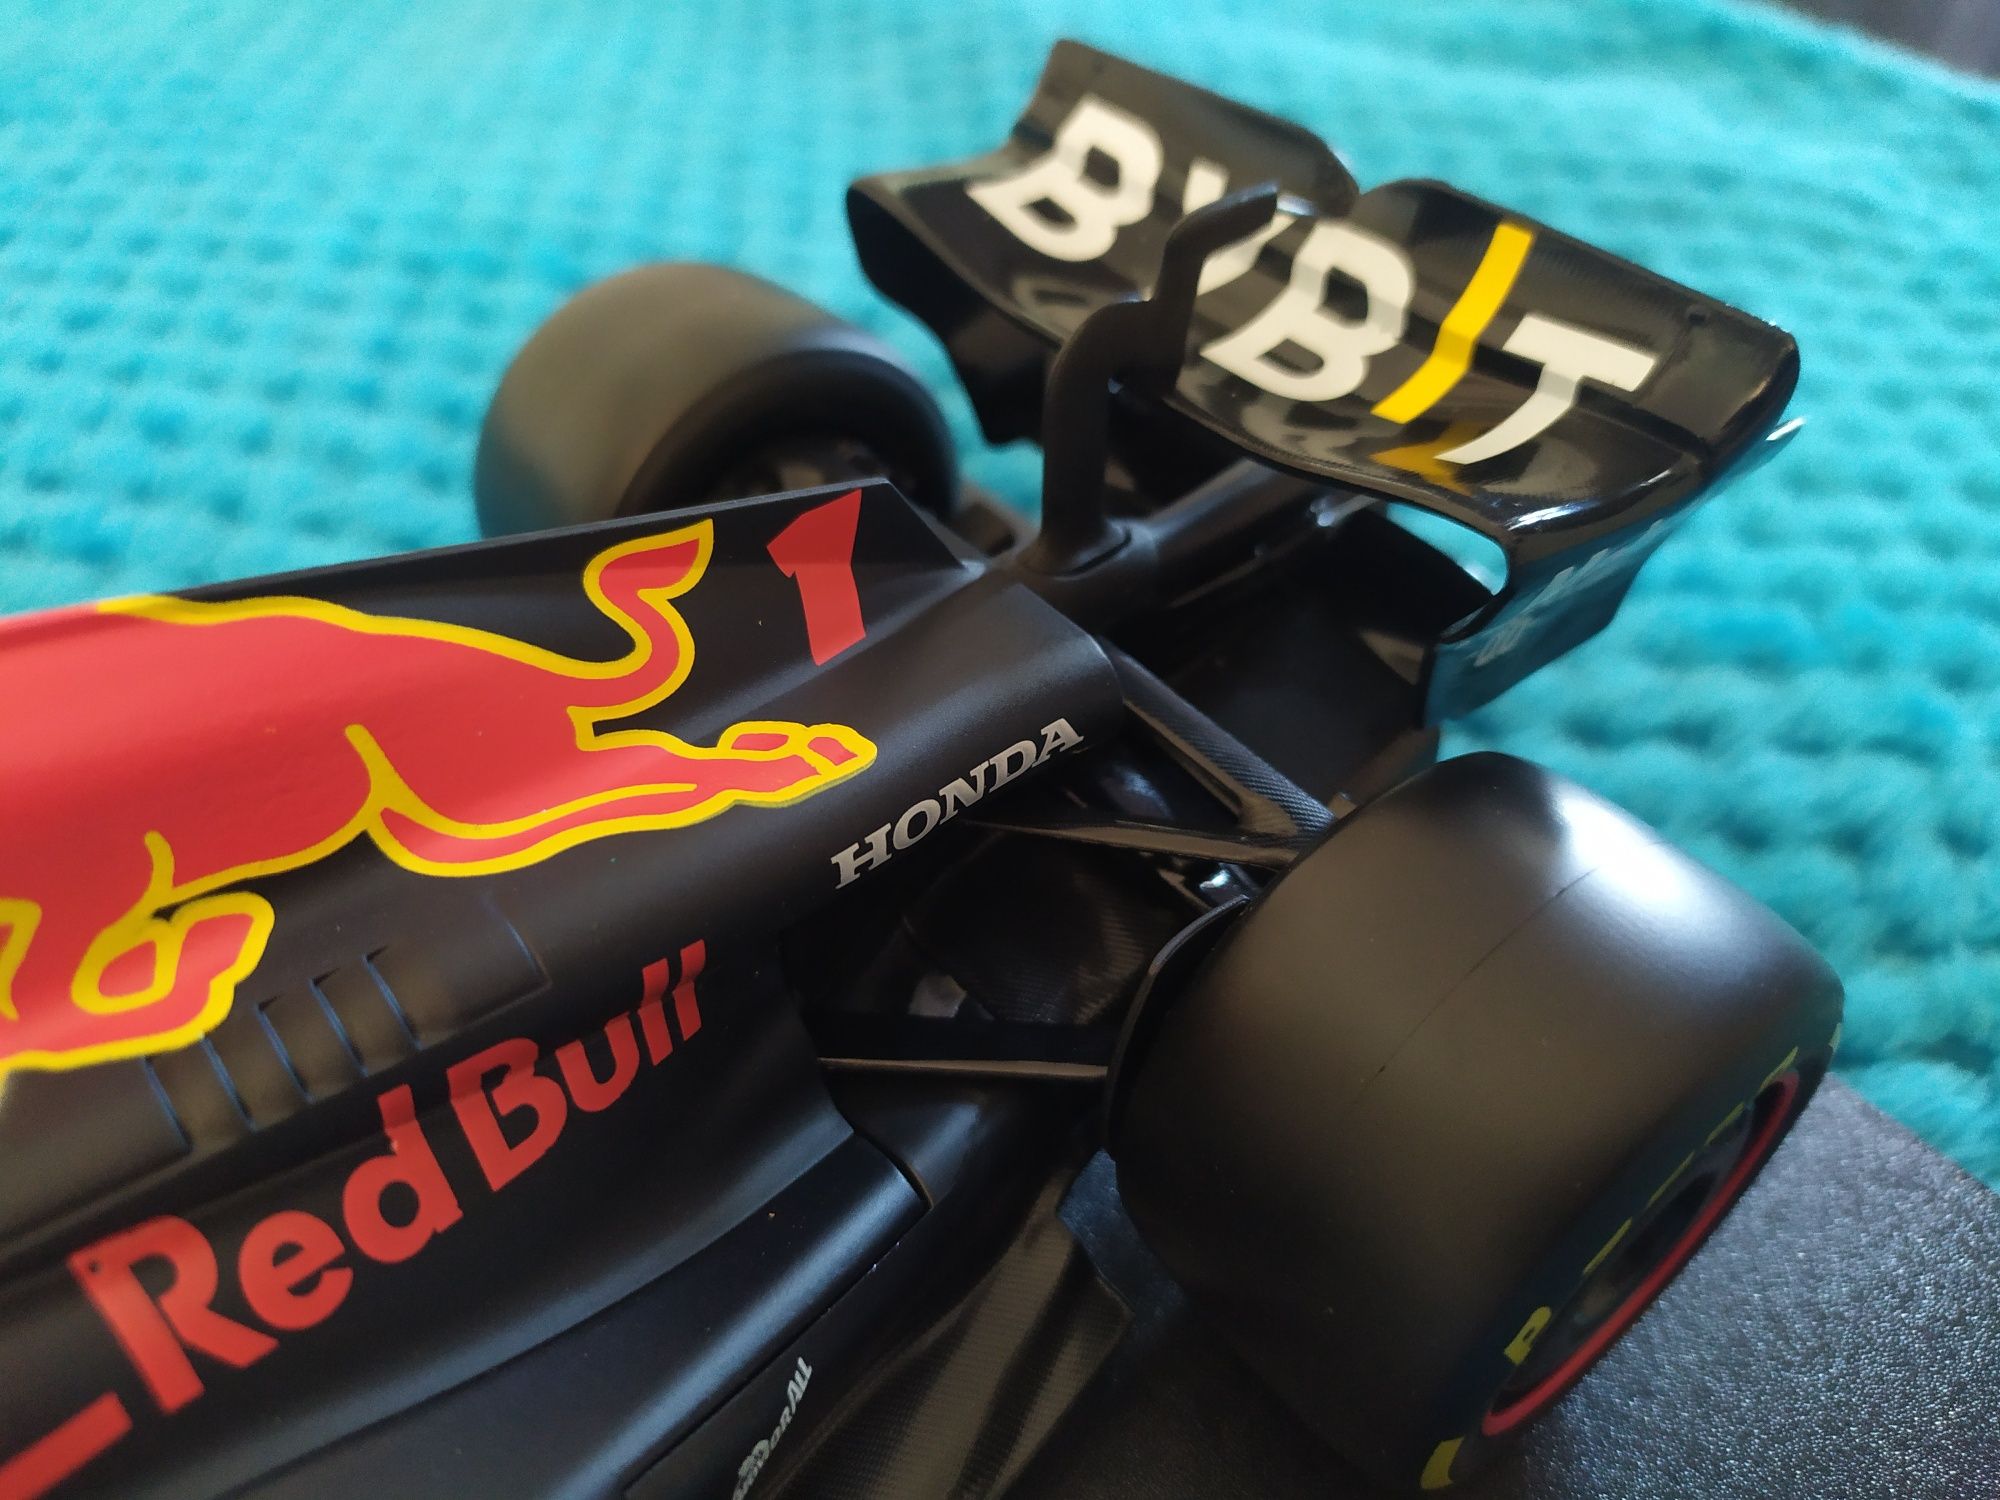 Model bolid F1 Red Bull 1:18 Max Verstappen złoty kask NOWY na prezent